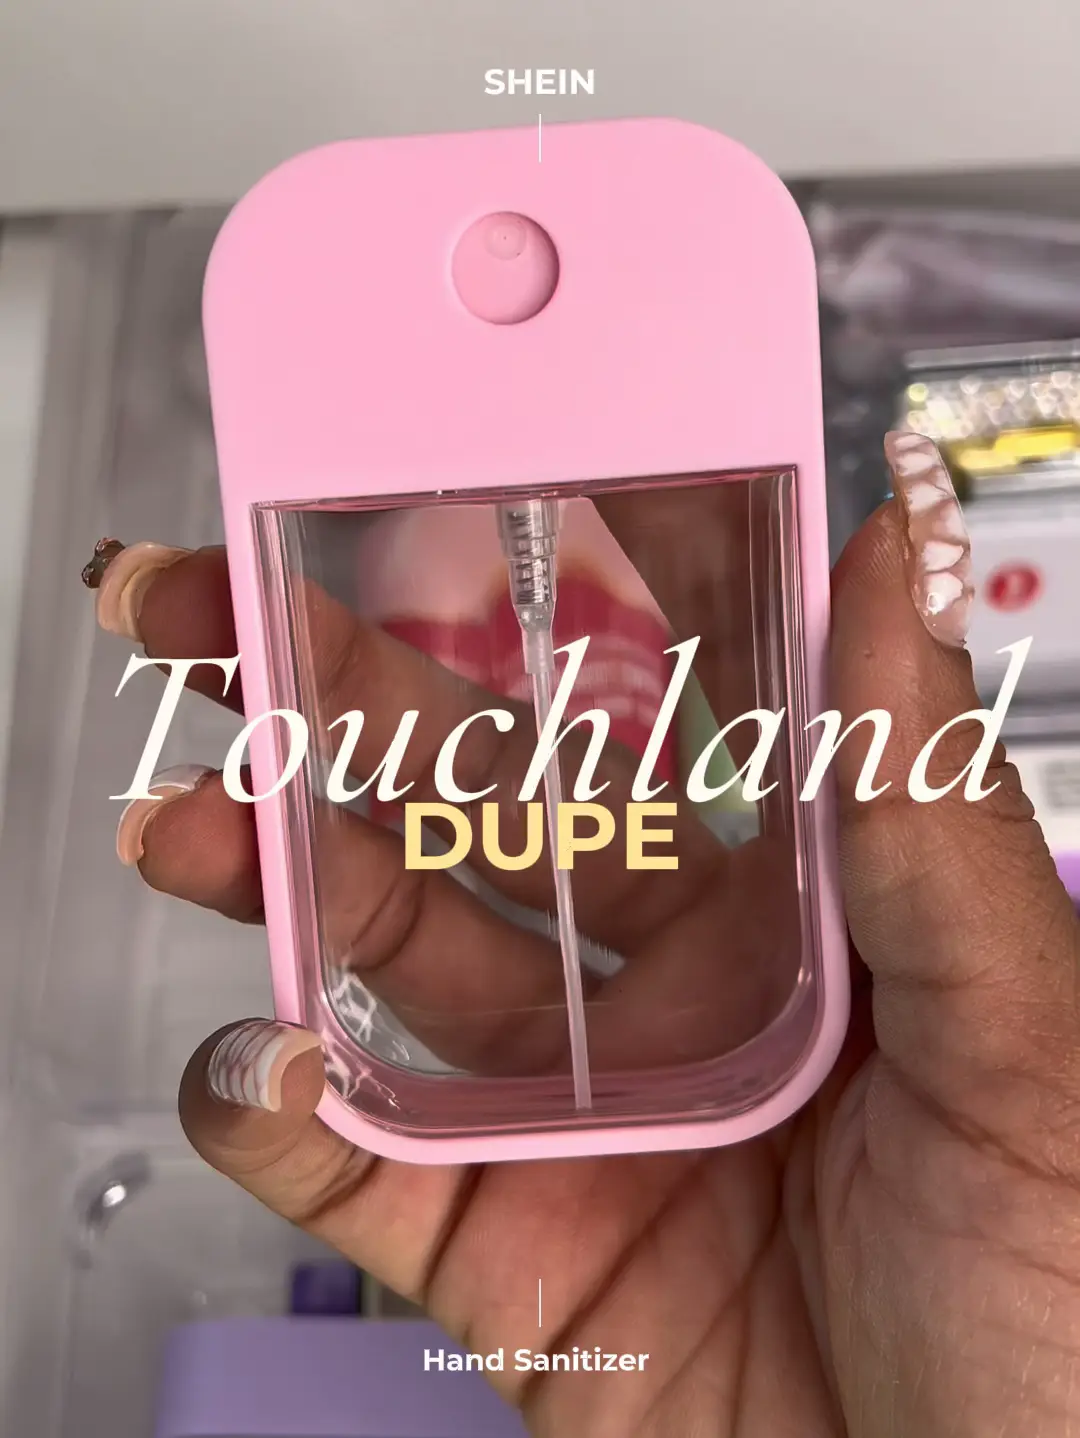 Touchland Hand Sanitizer – Blush Roots Boutique